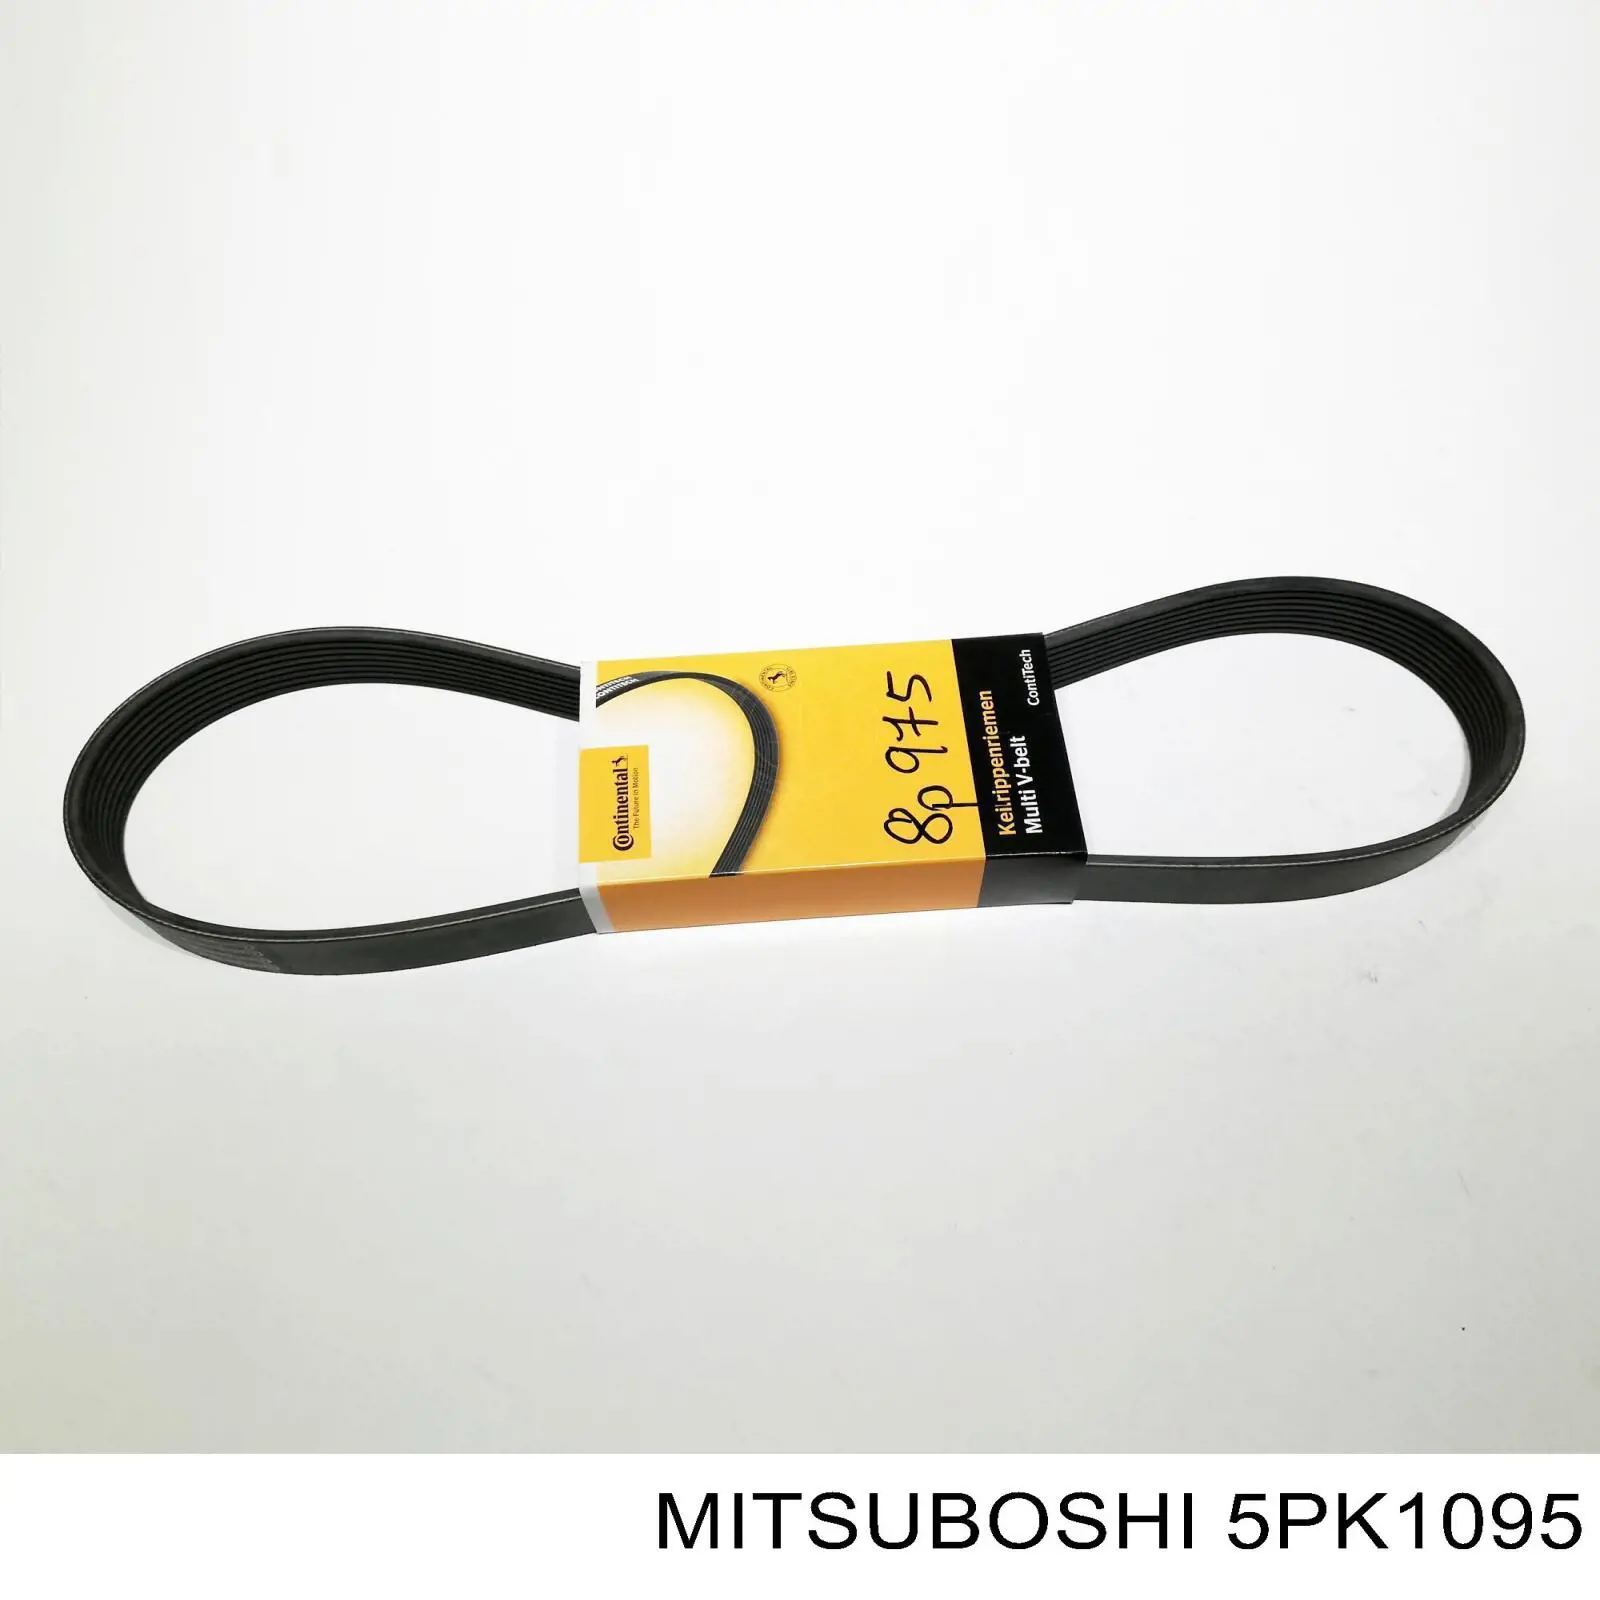 5PK1095 Mitsuboshi ремень генератора